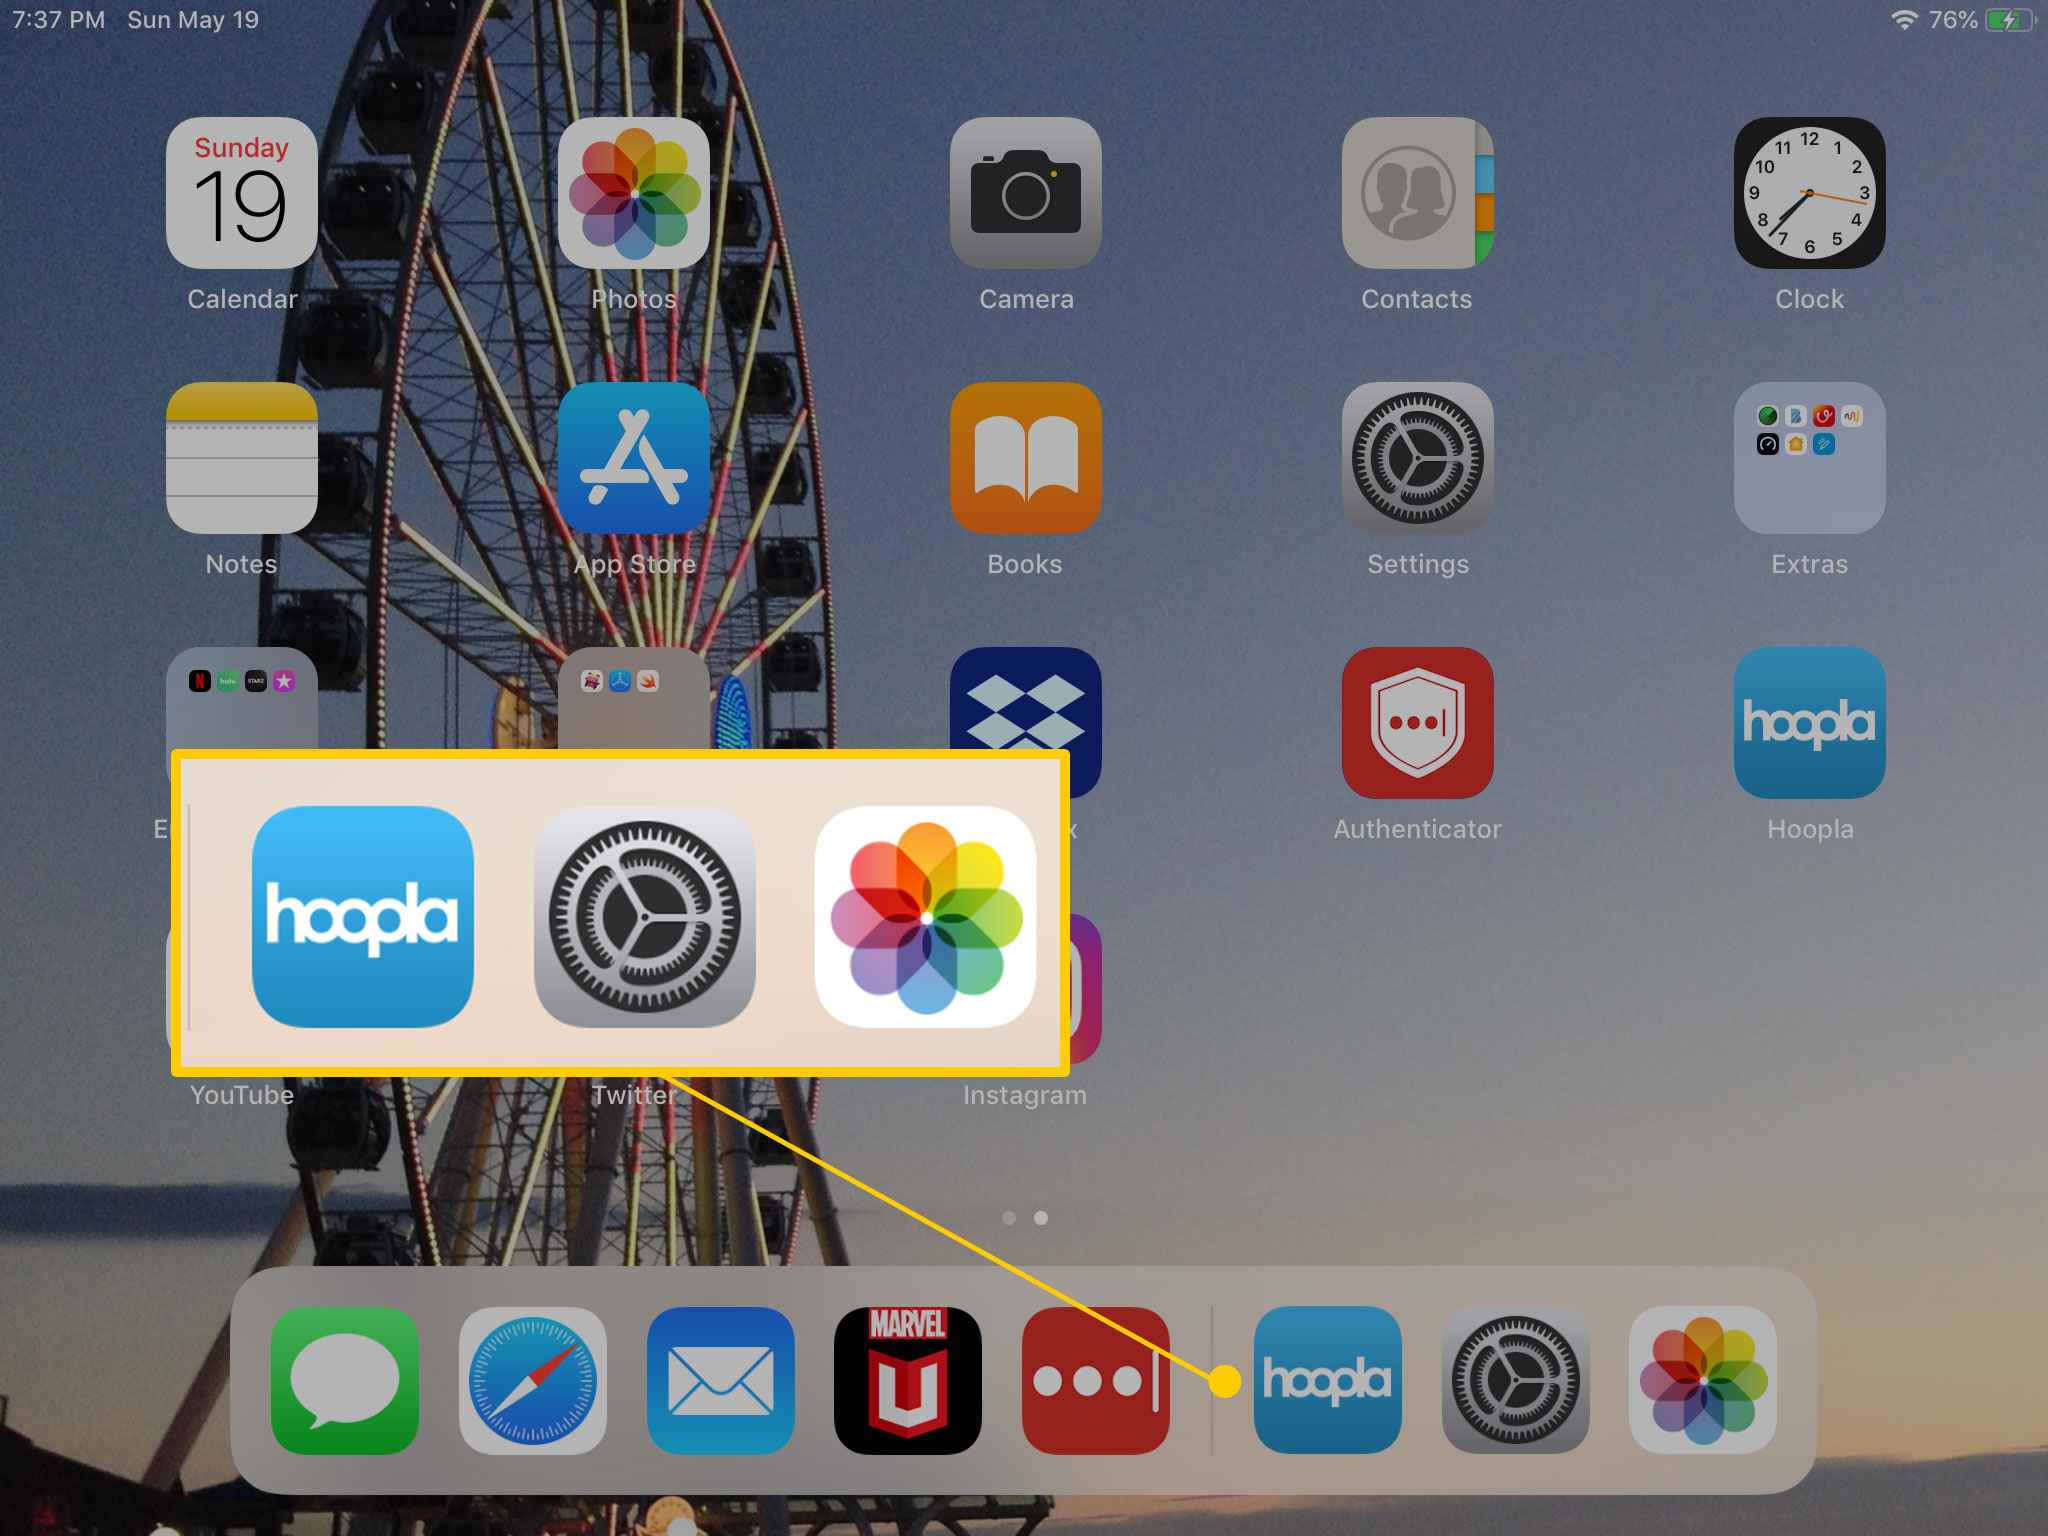 Aplicativos abertos recentemente no dock do iPad